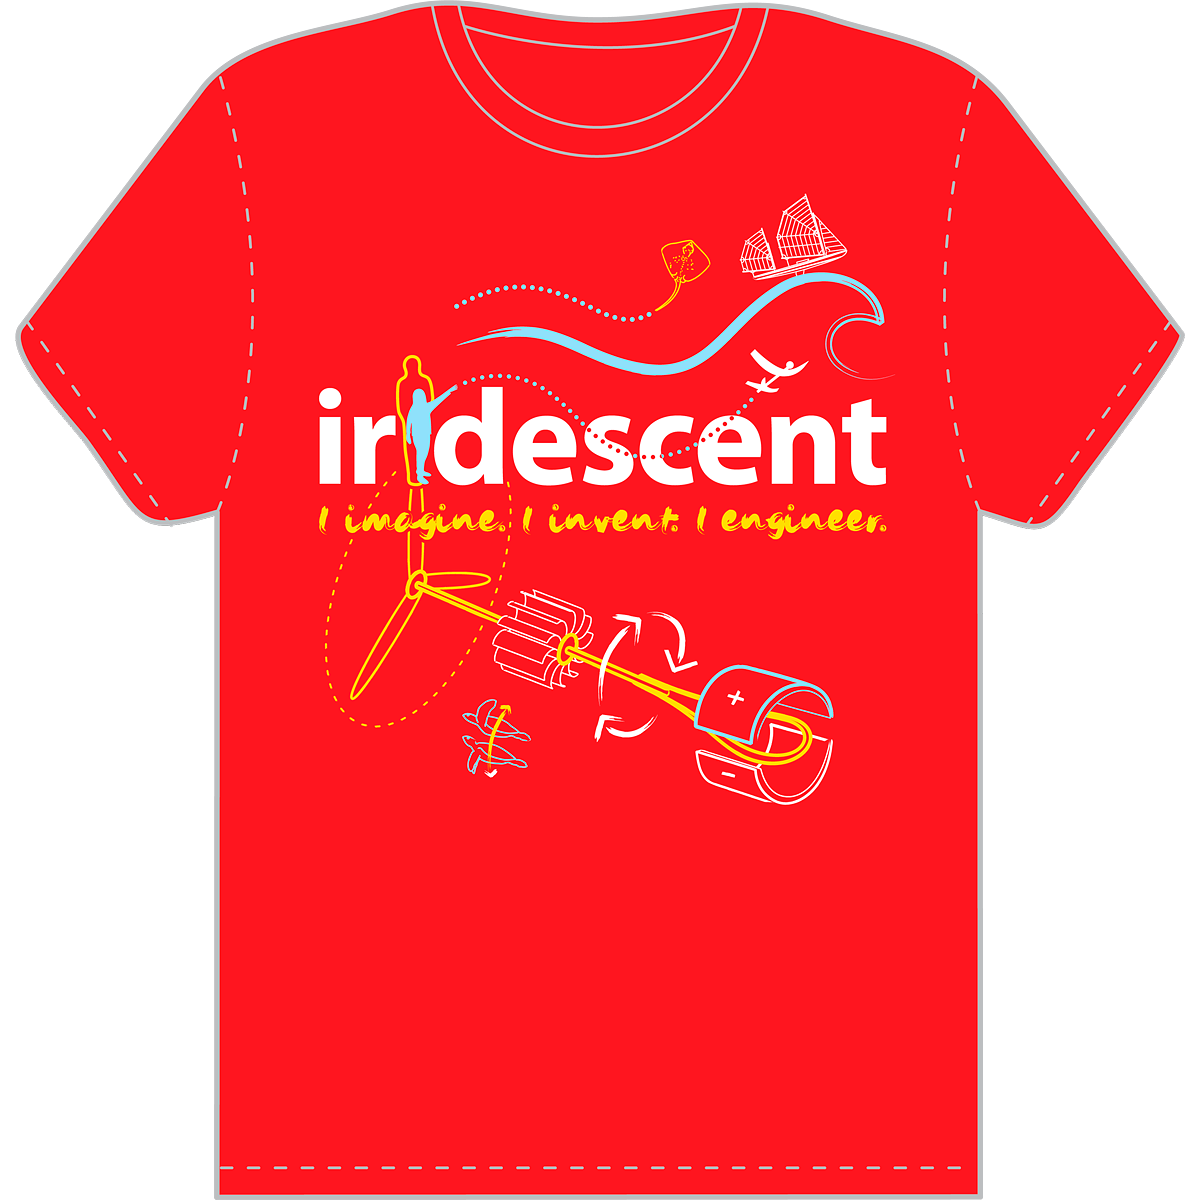 Iridescent logo/brand T-shirt